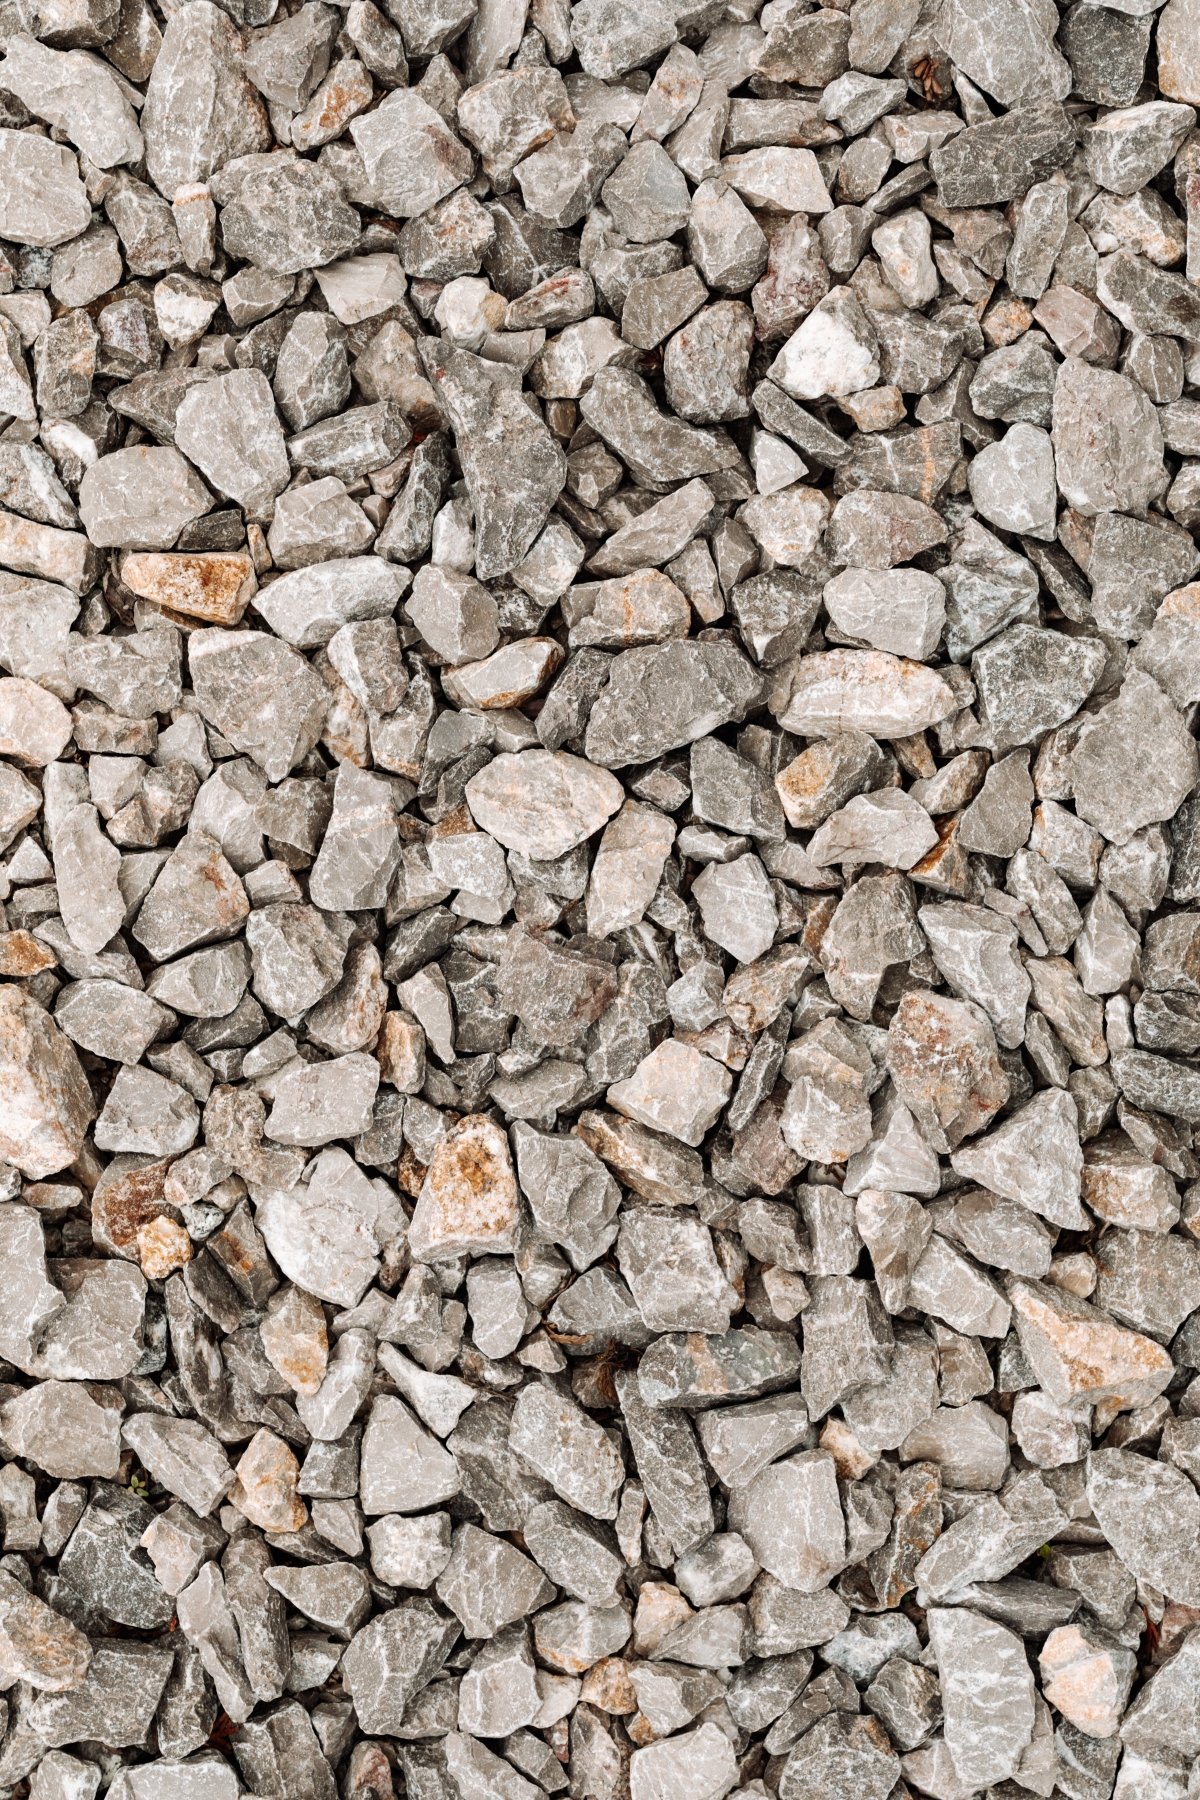 how to clean gravel white gravel stones